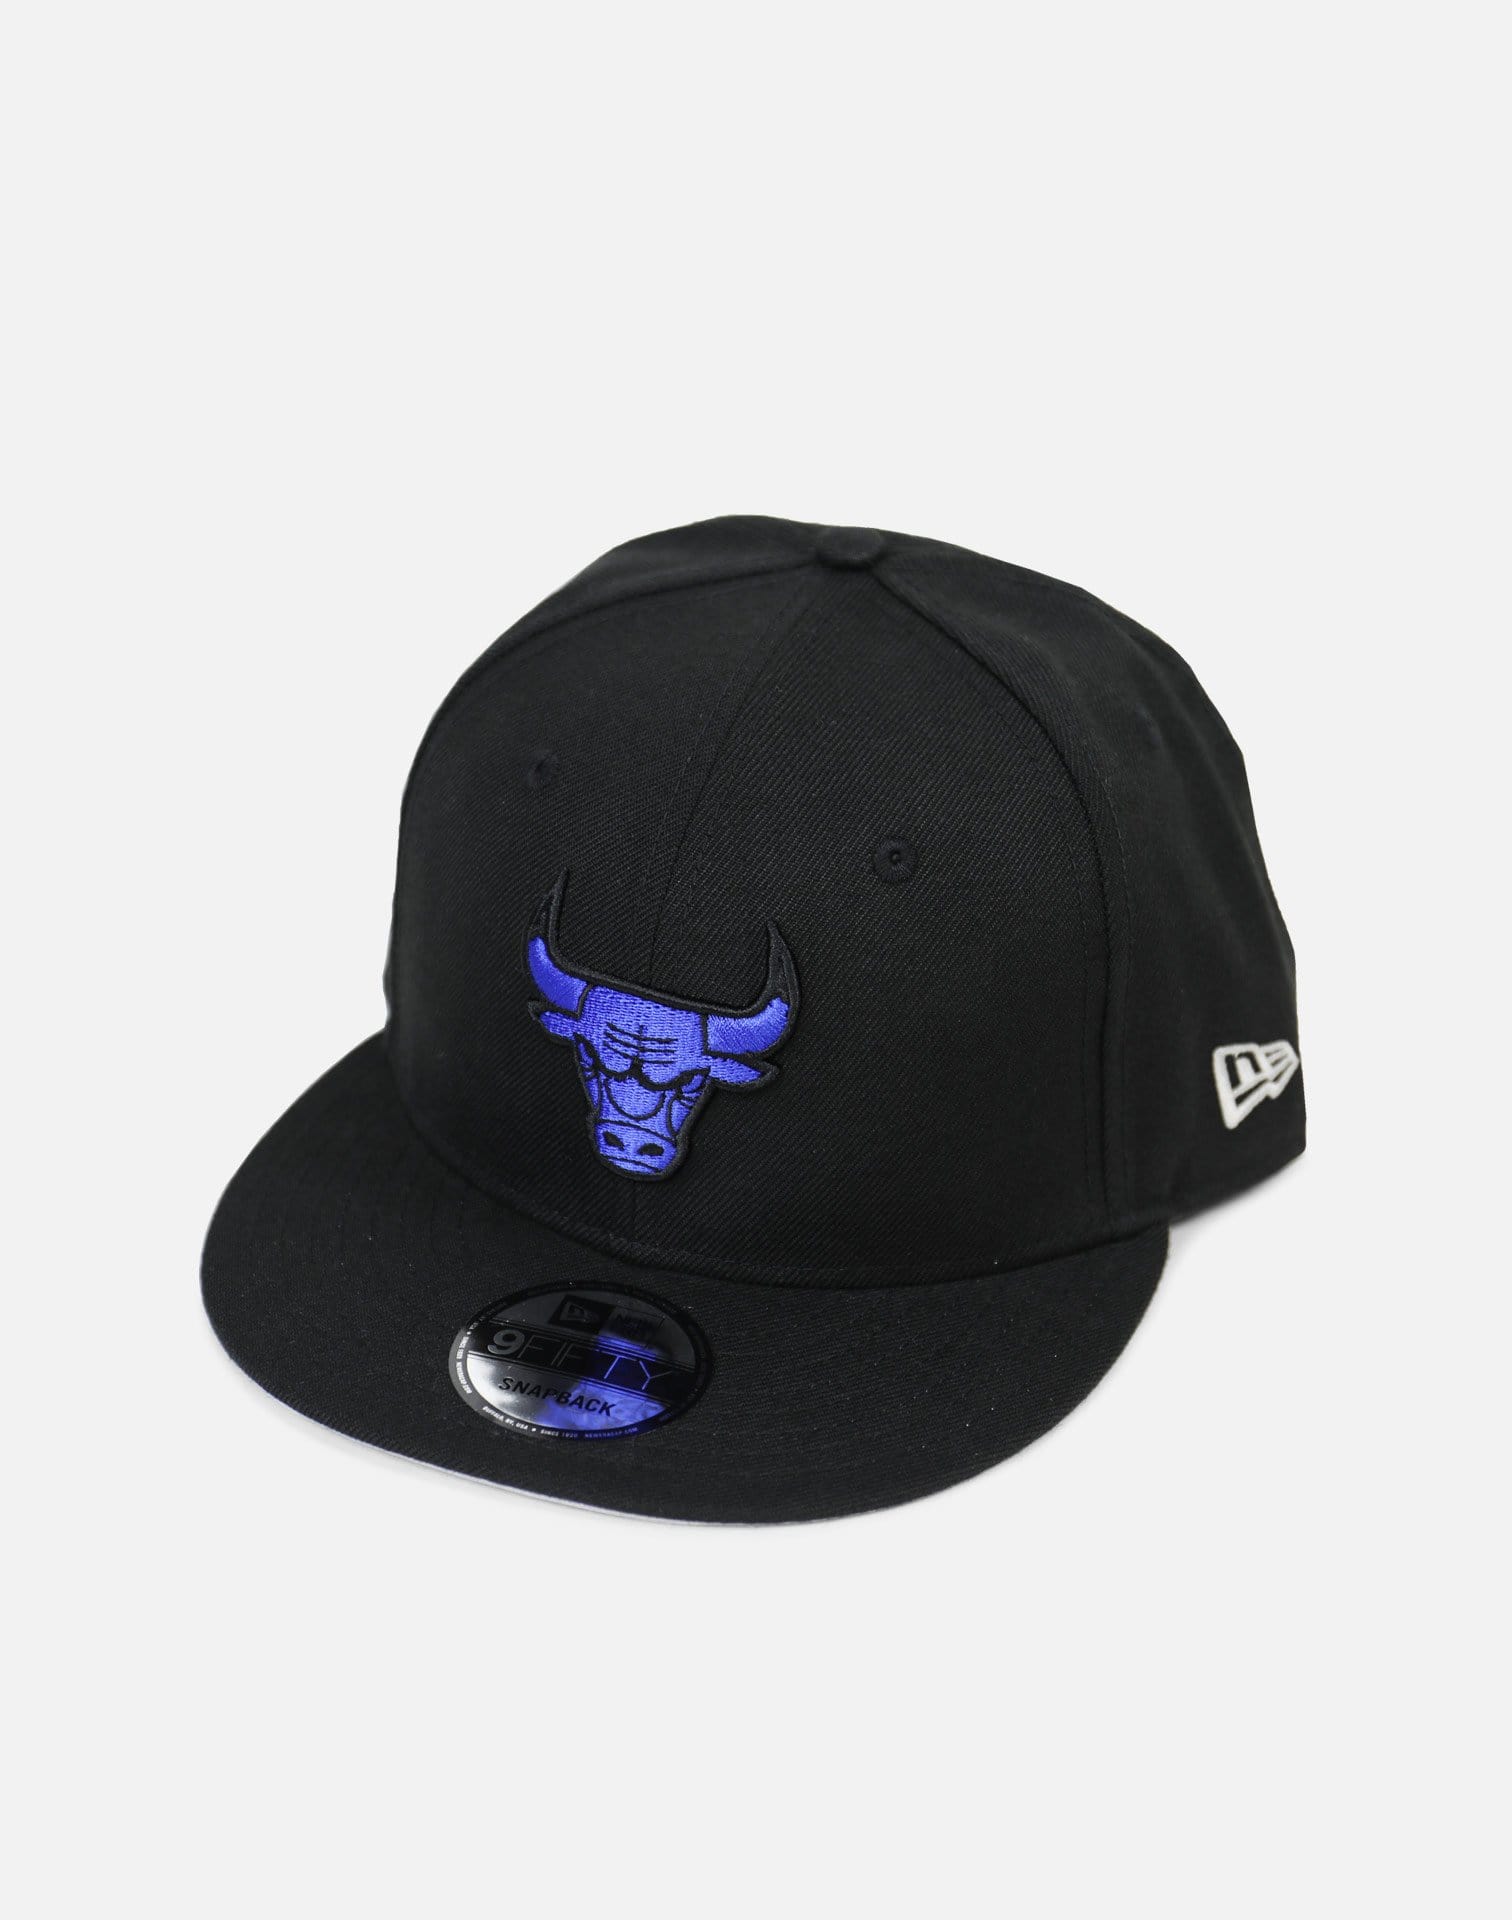 New Era Chicago Bulls Royal Hook Snapback Hat (Black/Royal Blue)